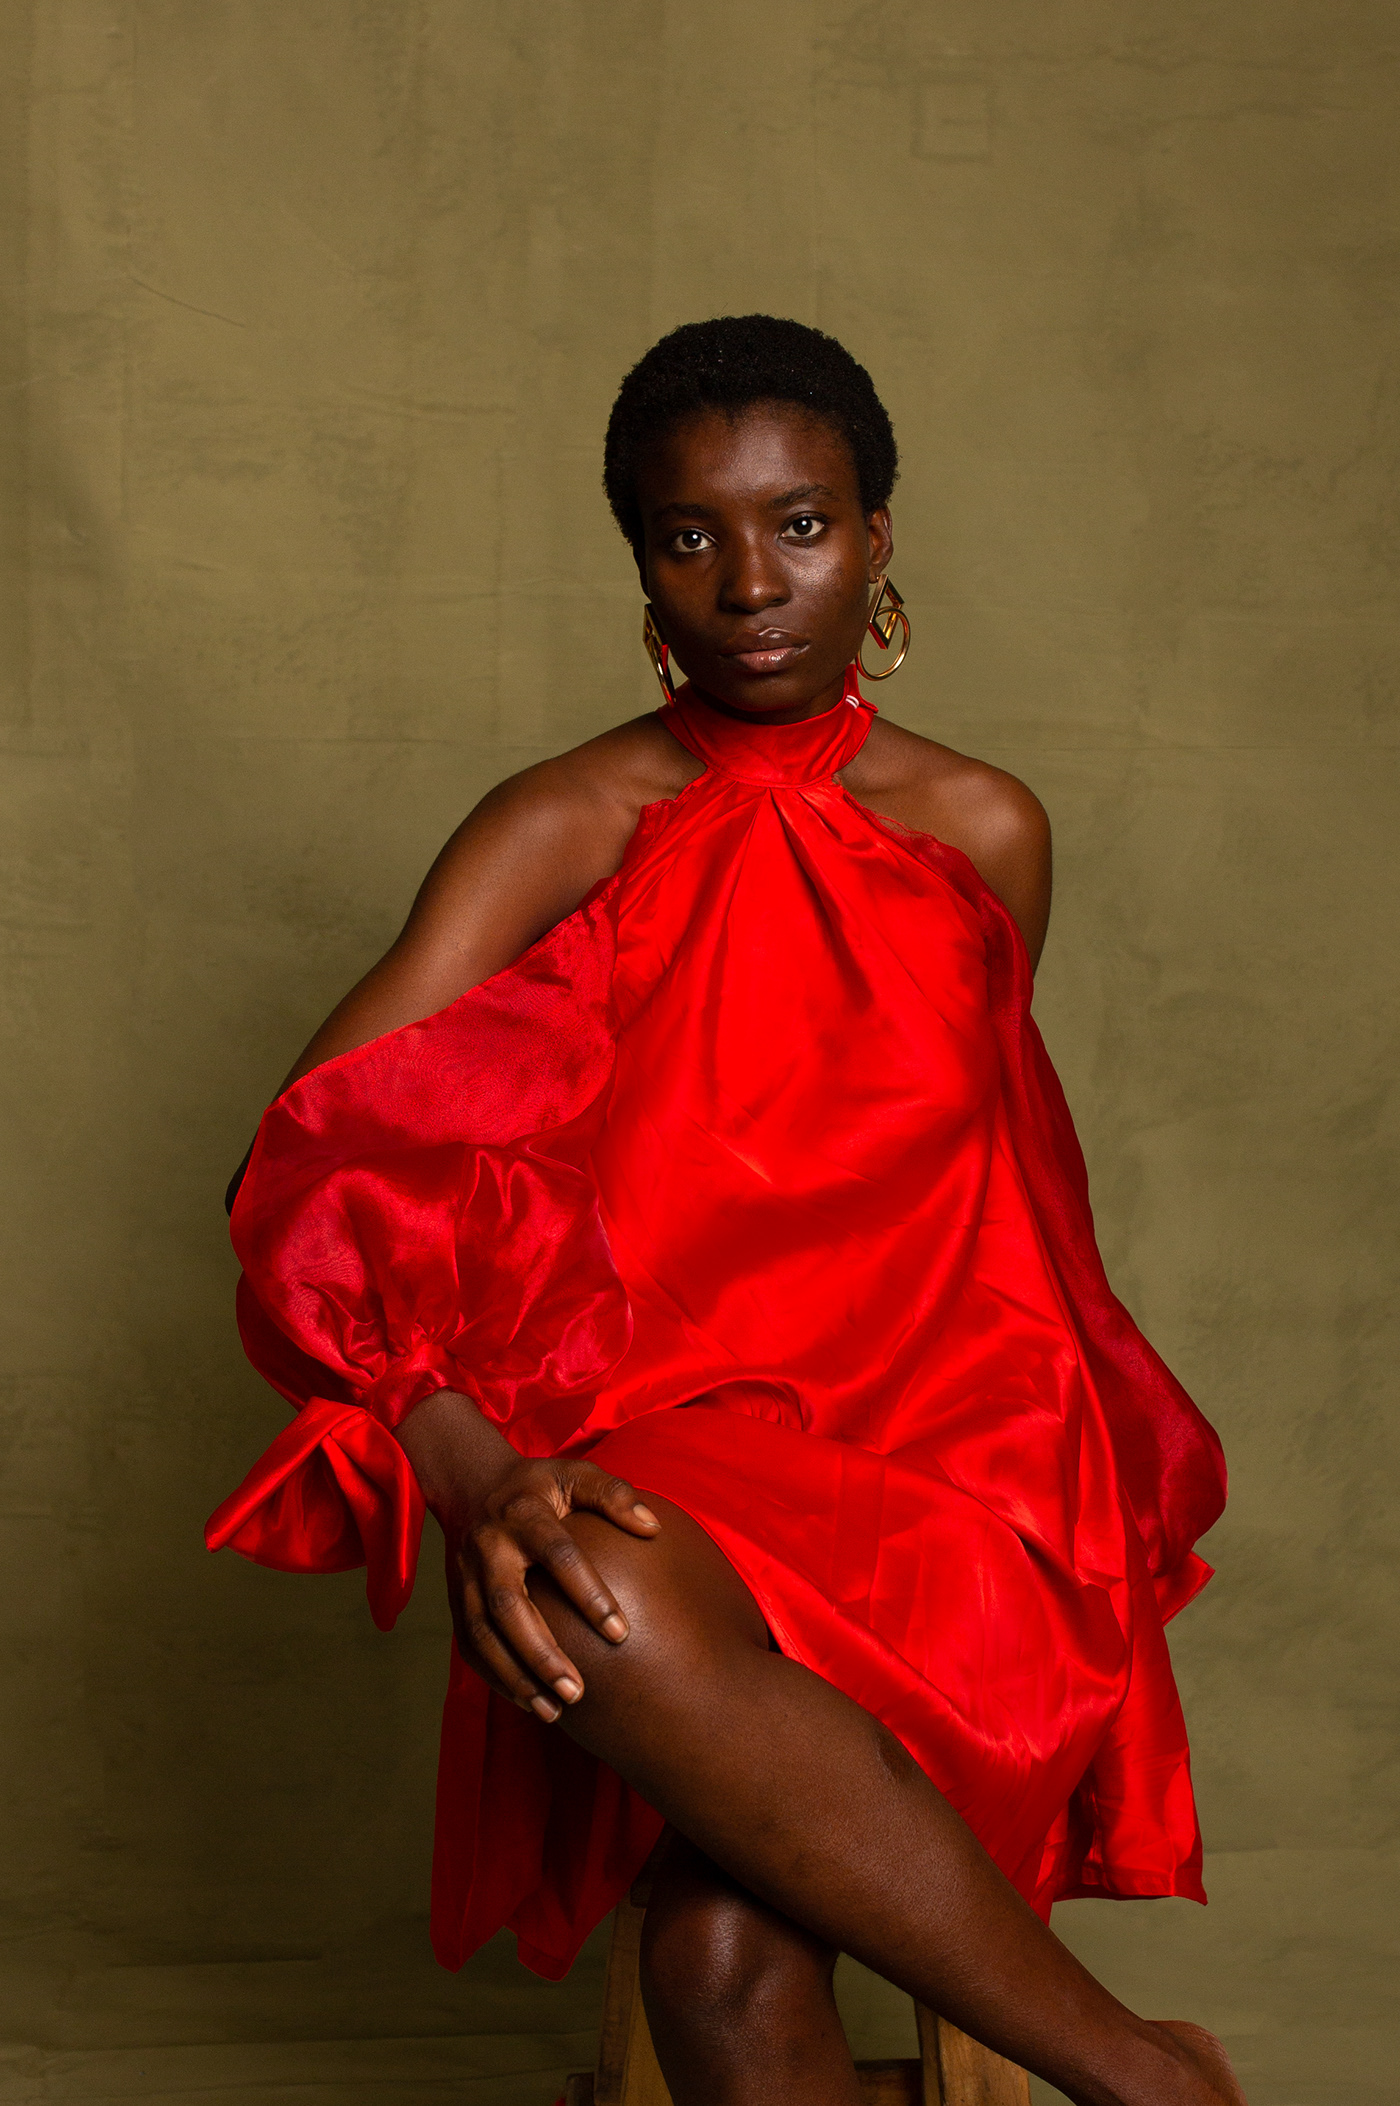 Black Skin photographing women portrait portrait photographer portrait photography